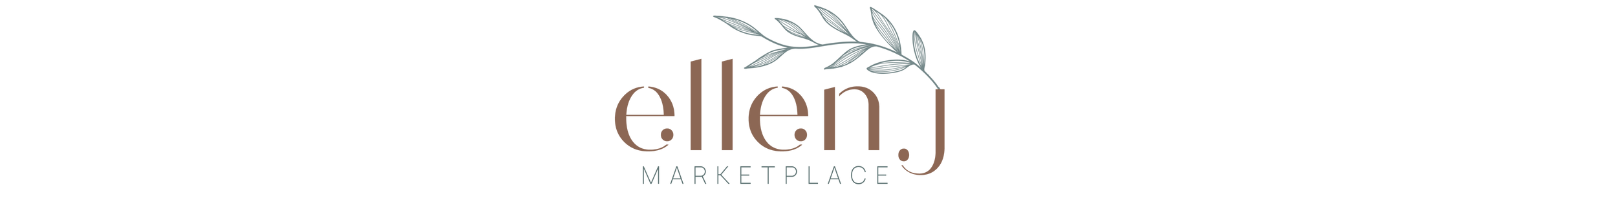 Ellen J Marketplace 